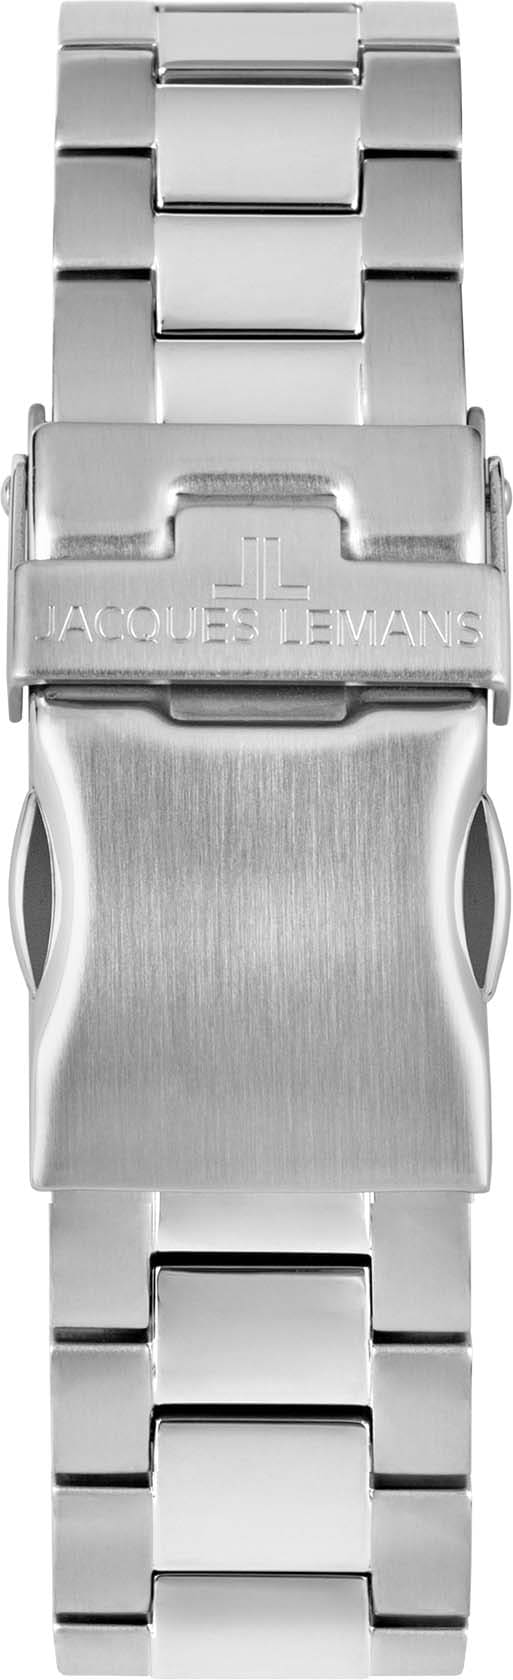 Jacques Lemans Multifunktionsuhr »42-11H« online kaufen BAUR 